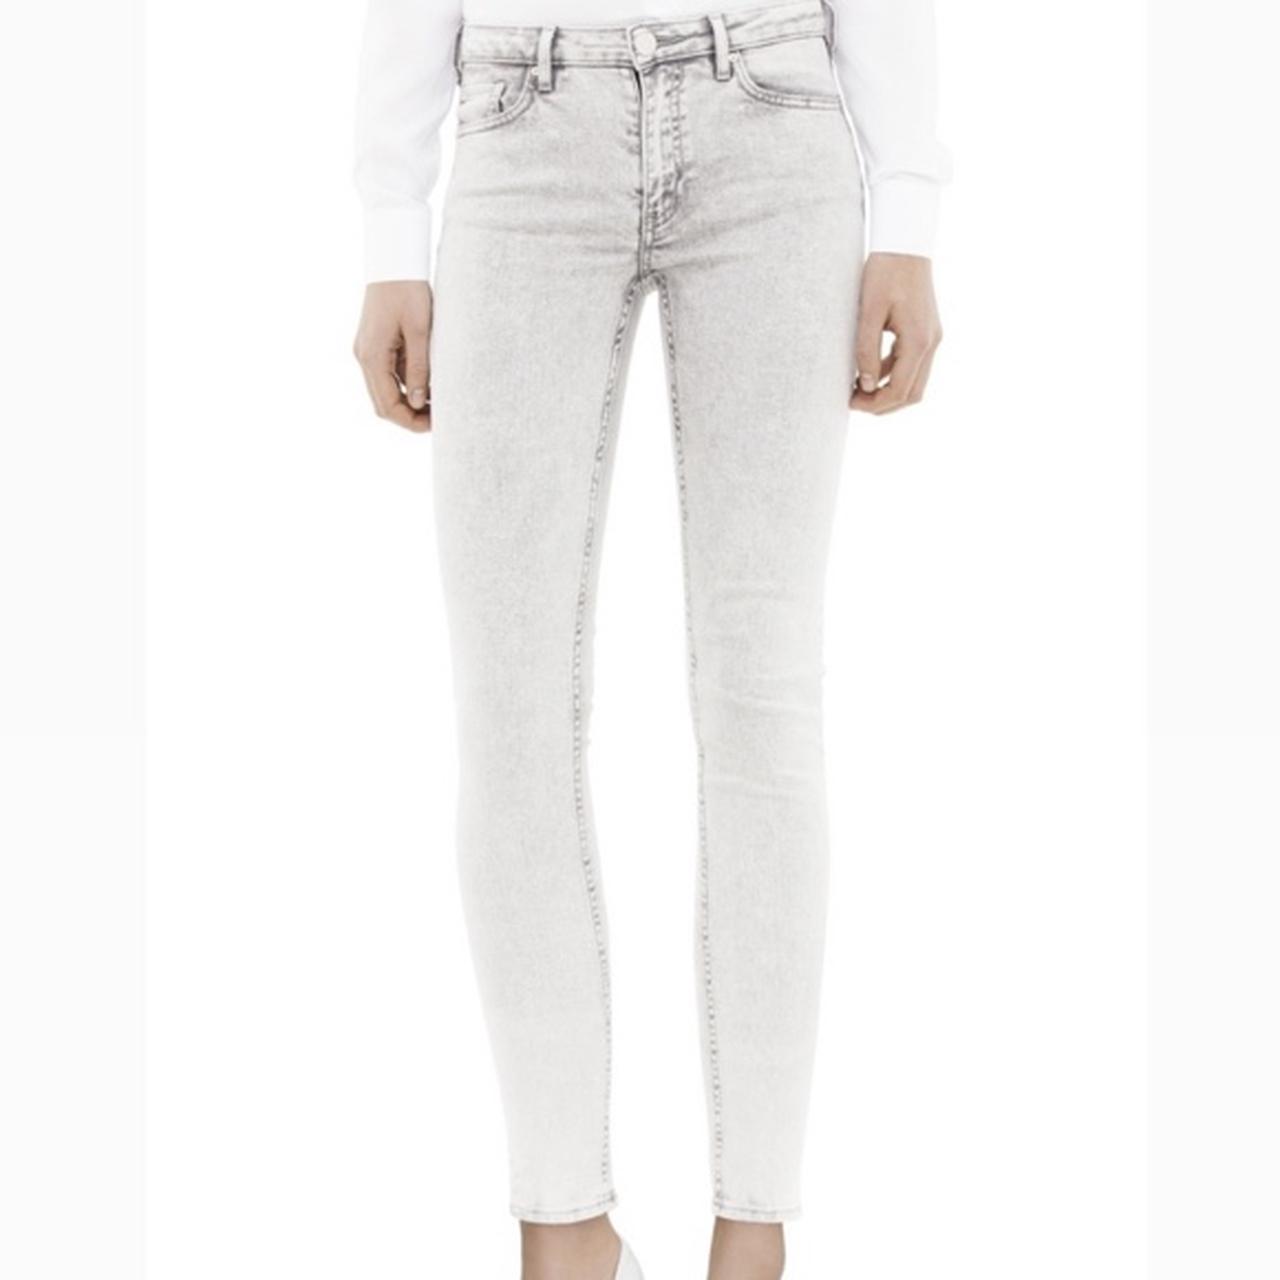 Acne Studios Skin-5 pocket jeans NWT!! Retails for... - Depop